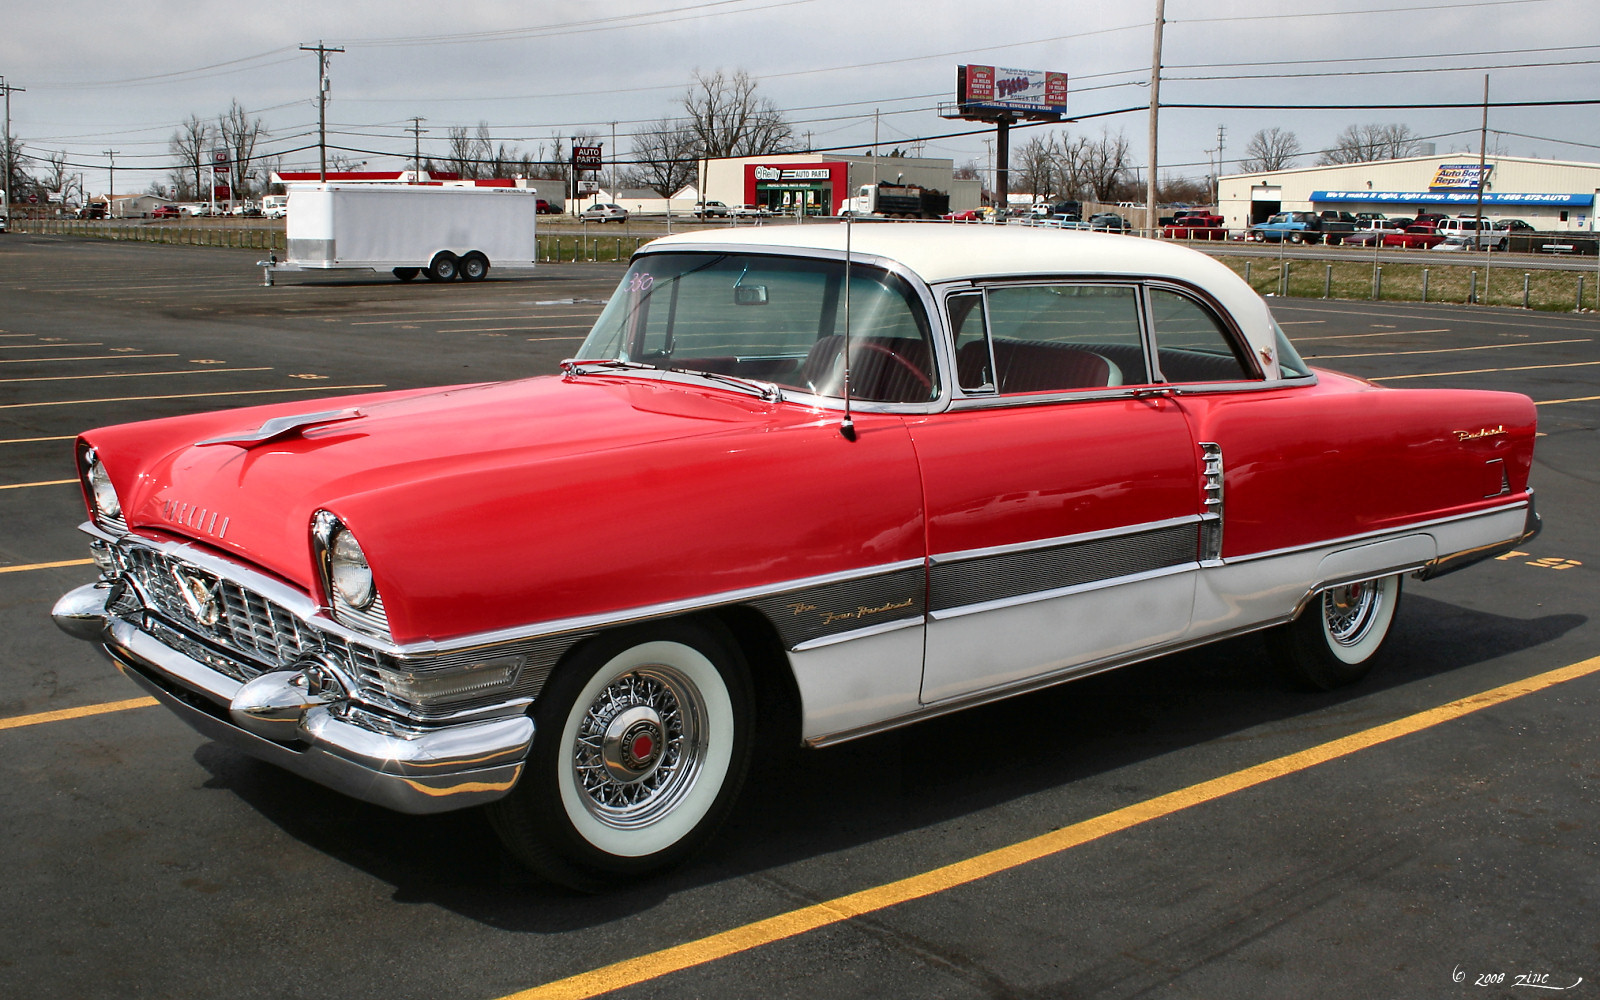 File:1955-Packard-400-2dr-HT.jpg - Wikimedia Commons